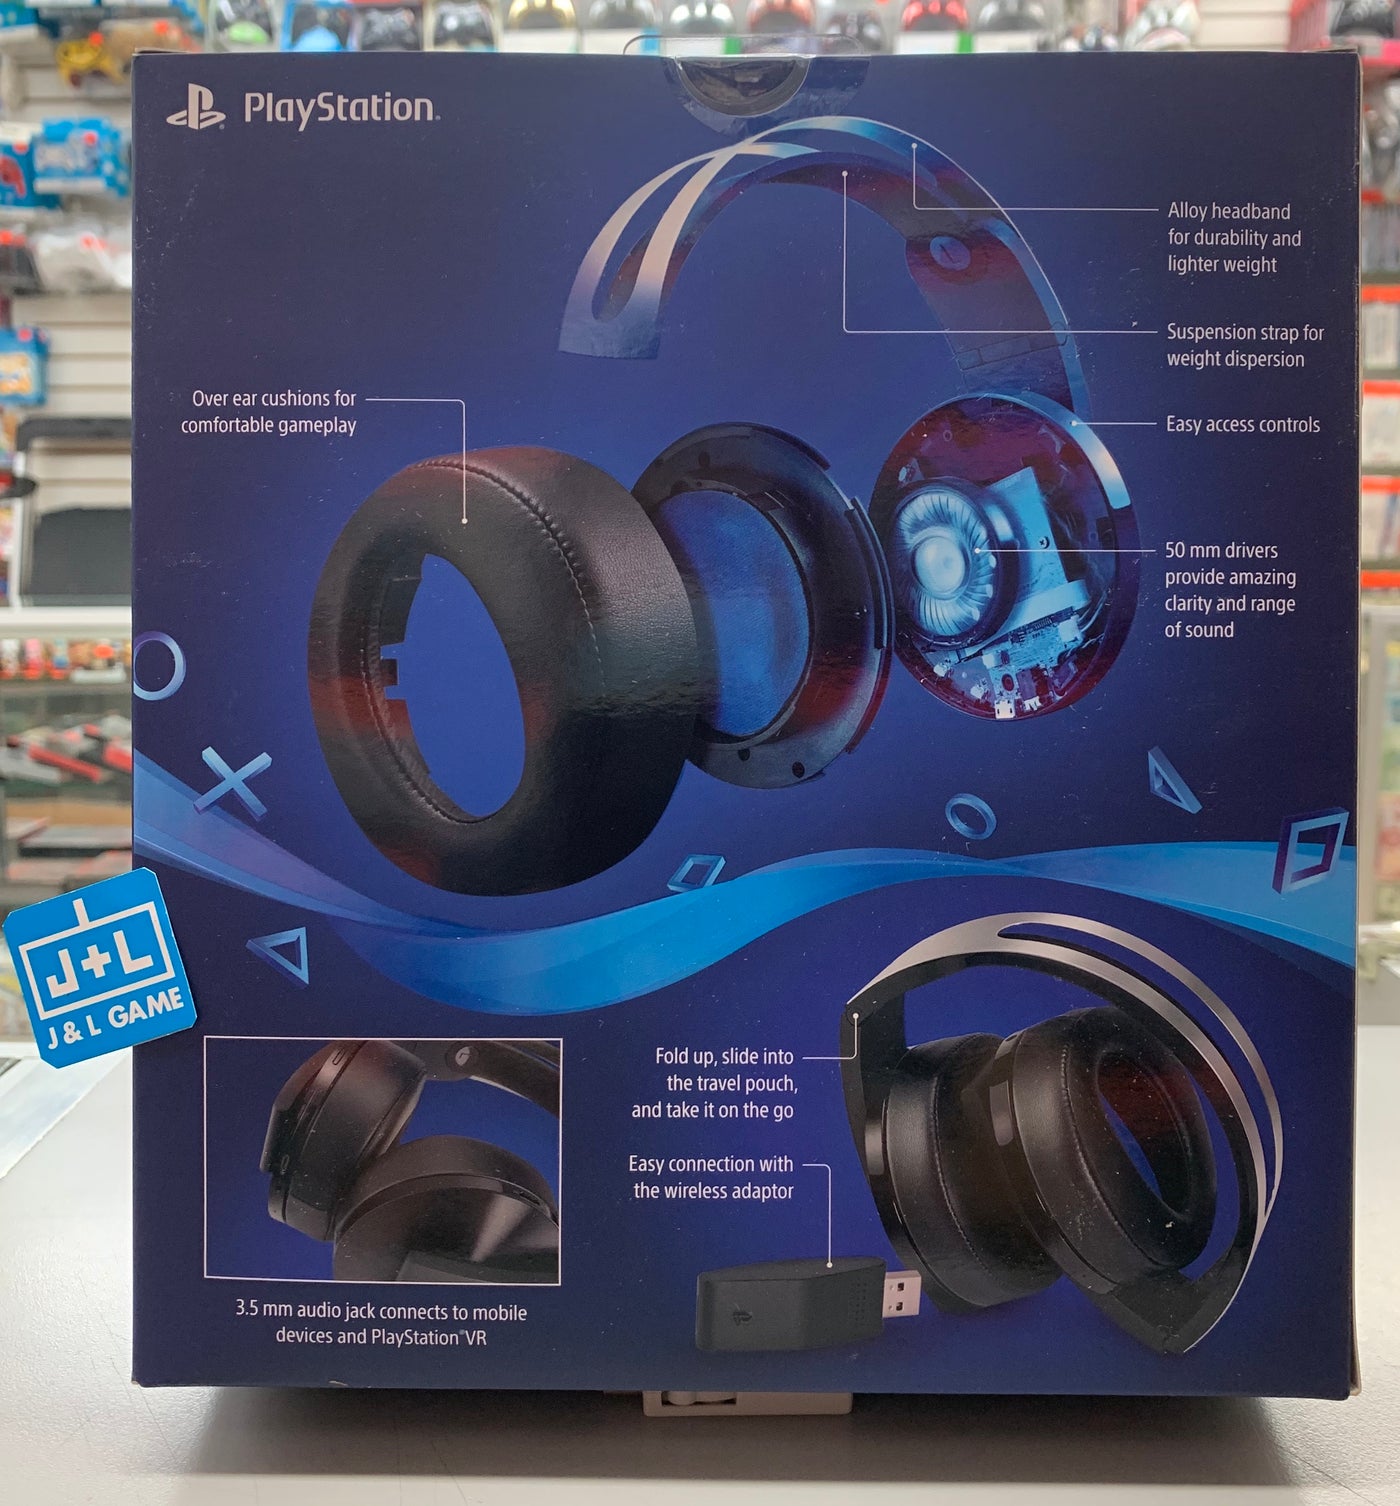 PlayStation Platinum Wireless Headset - PlayStation 4 Accessories Playstation   